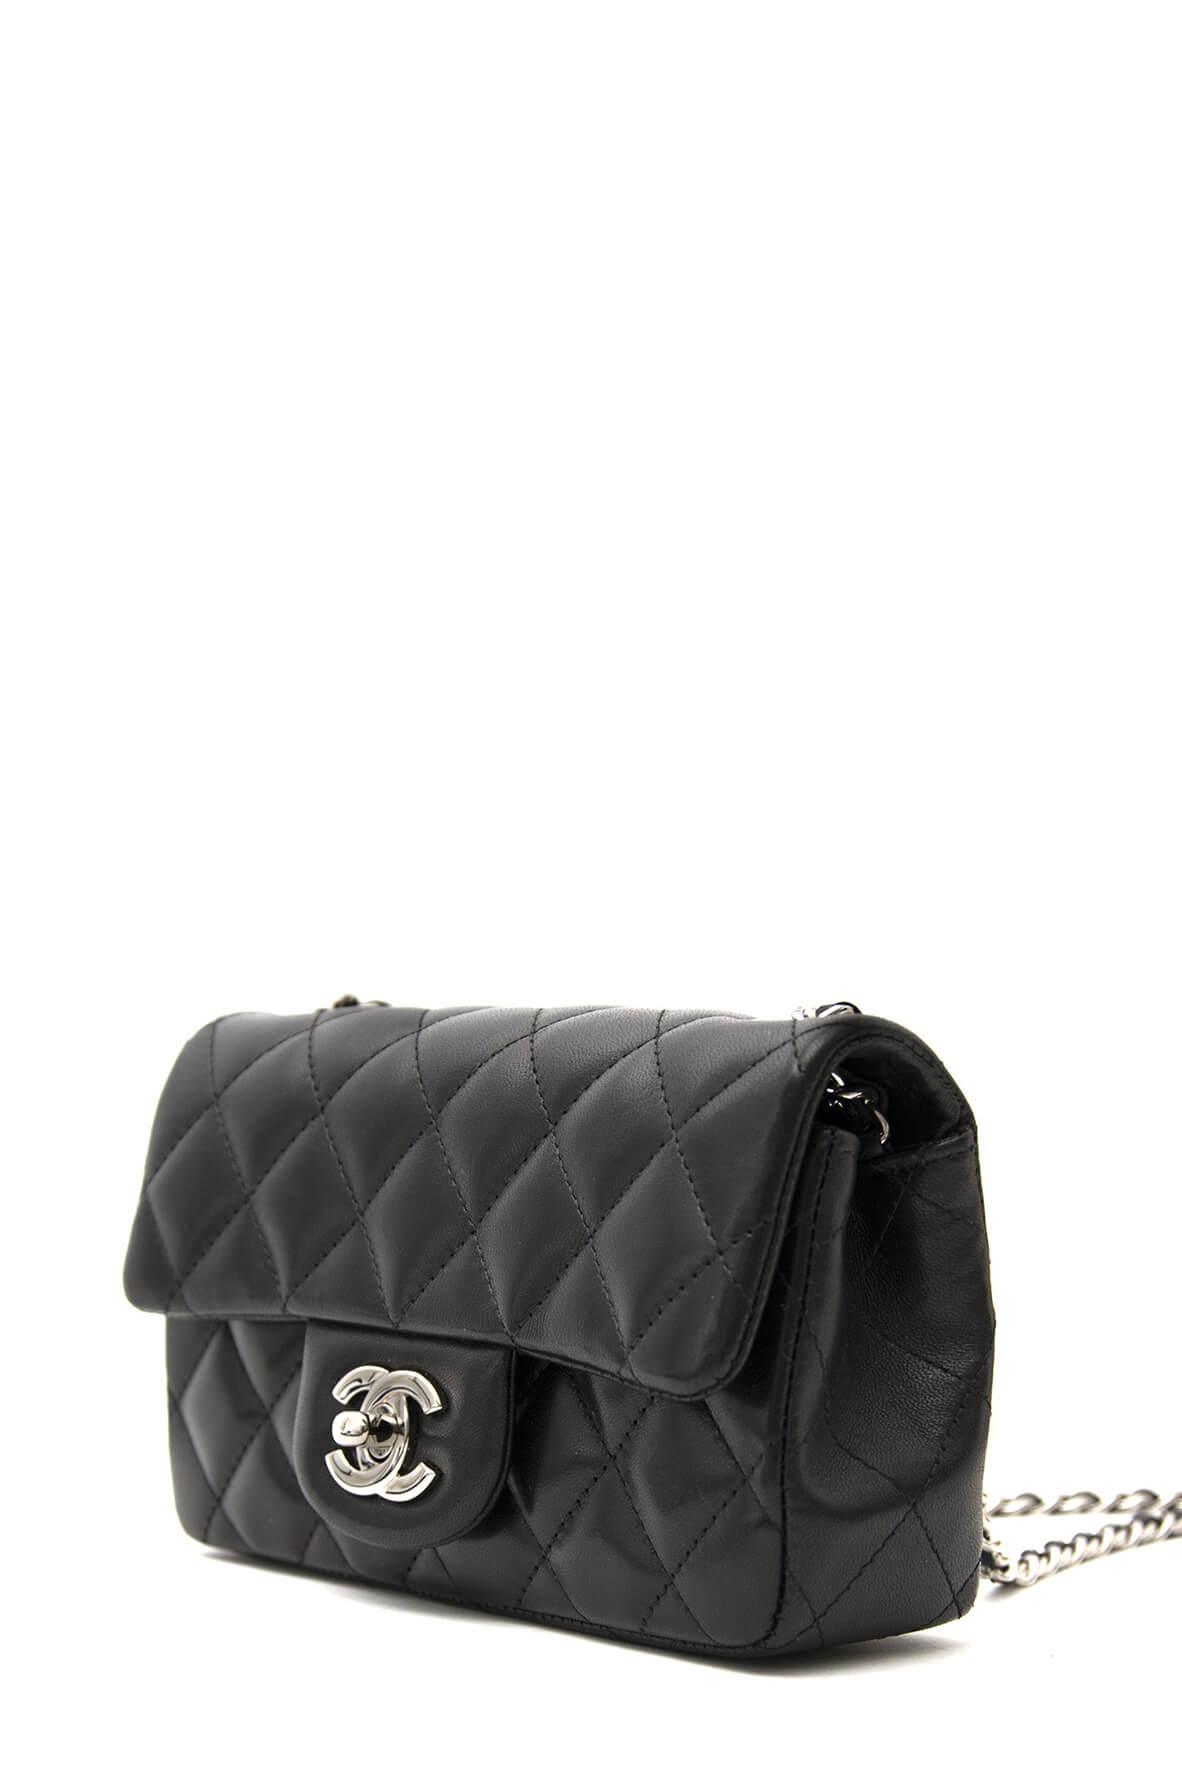 Chanel Classic Extra Mini Single Flap Bag